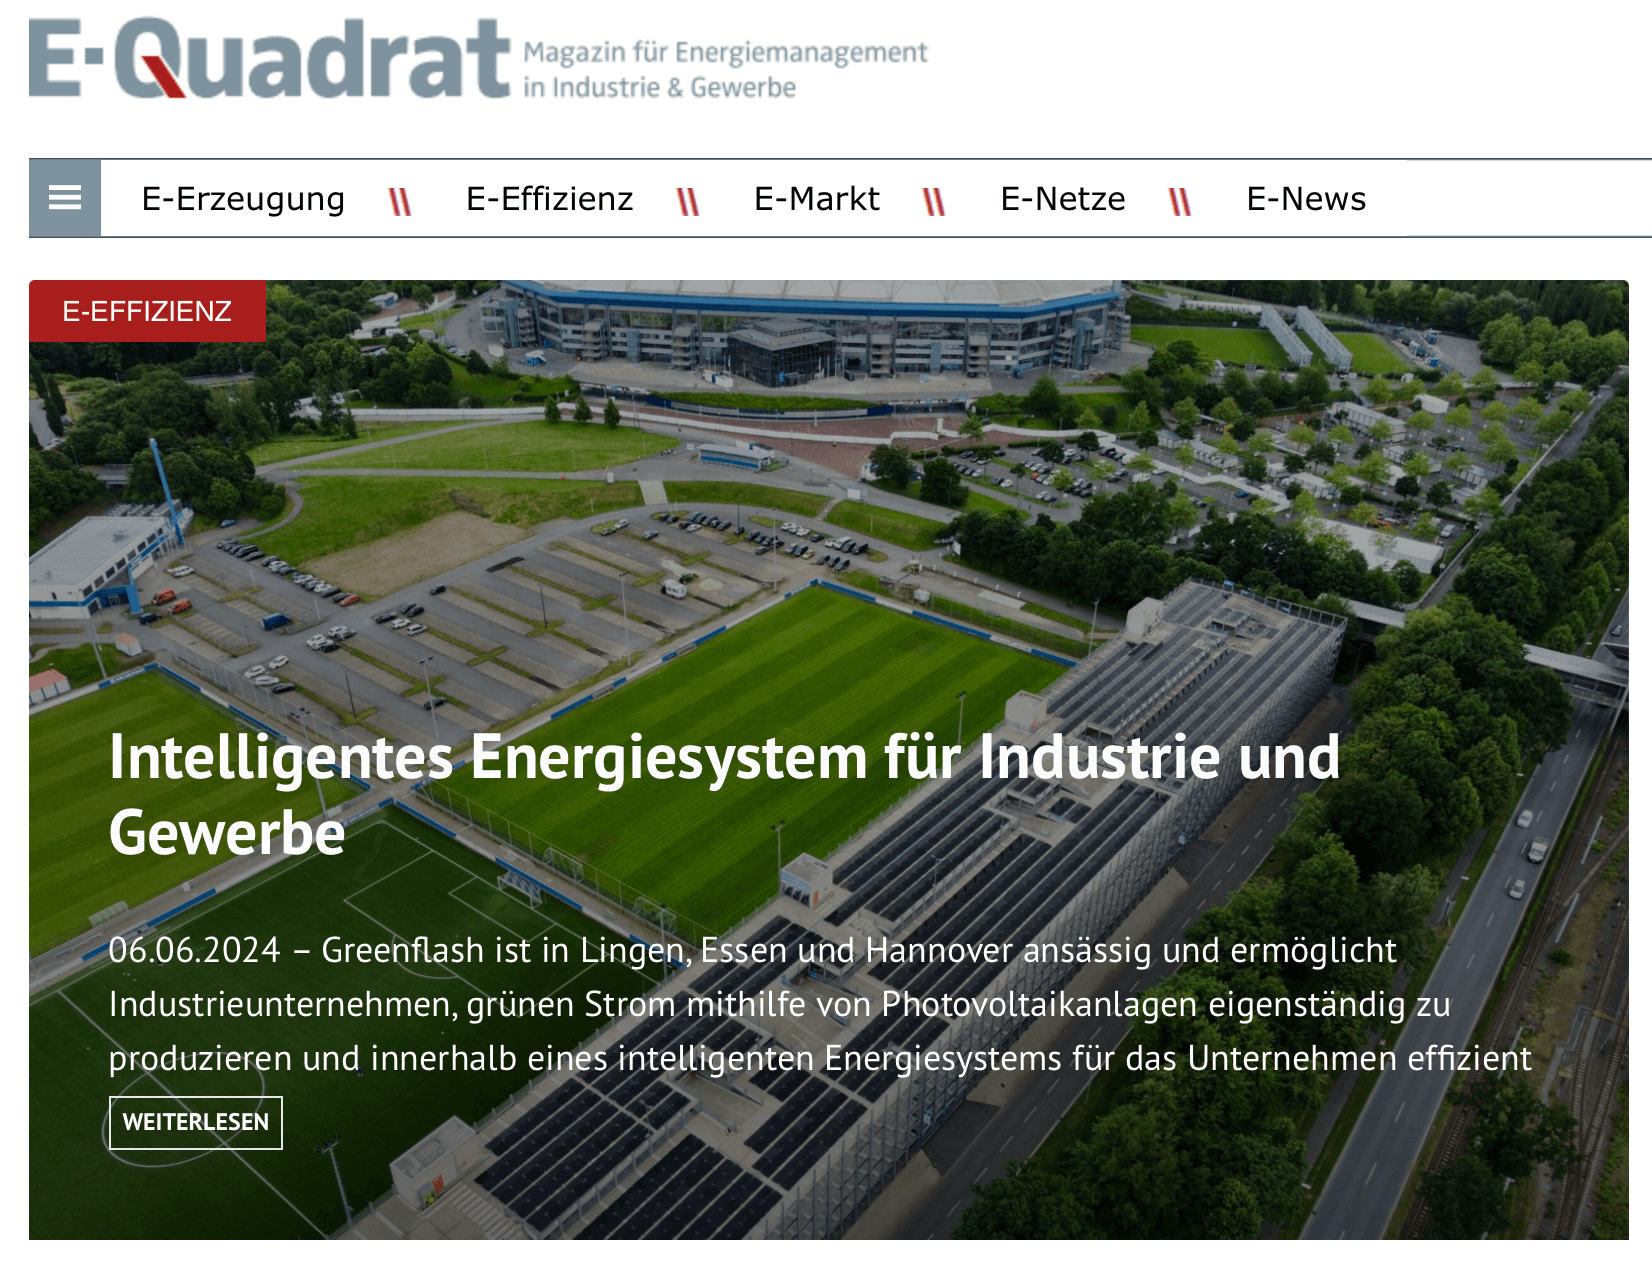 E-Quadrat Pressebericht über intelligente Energiesystem